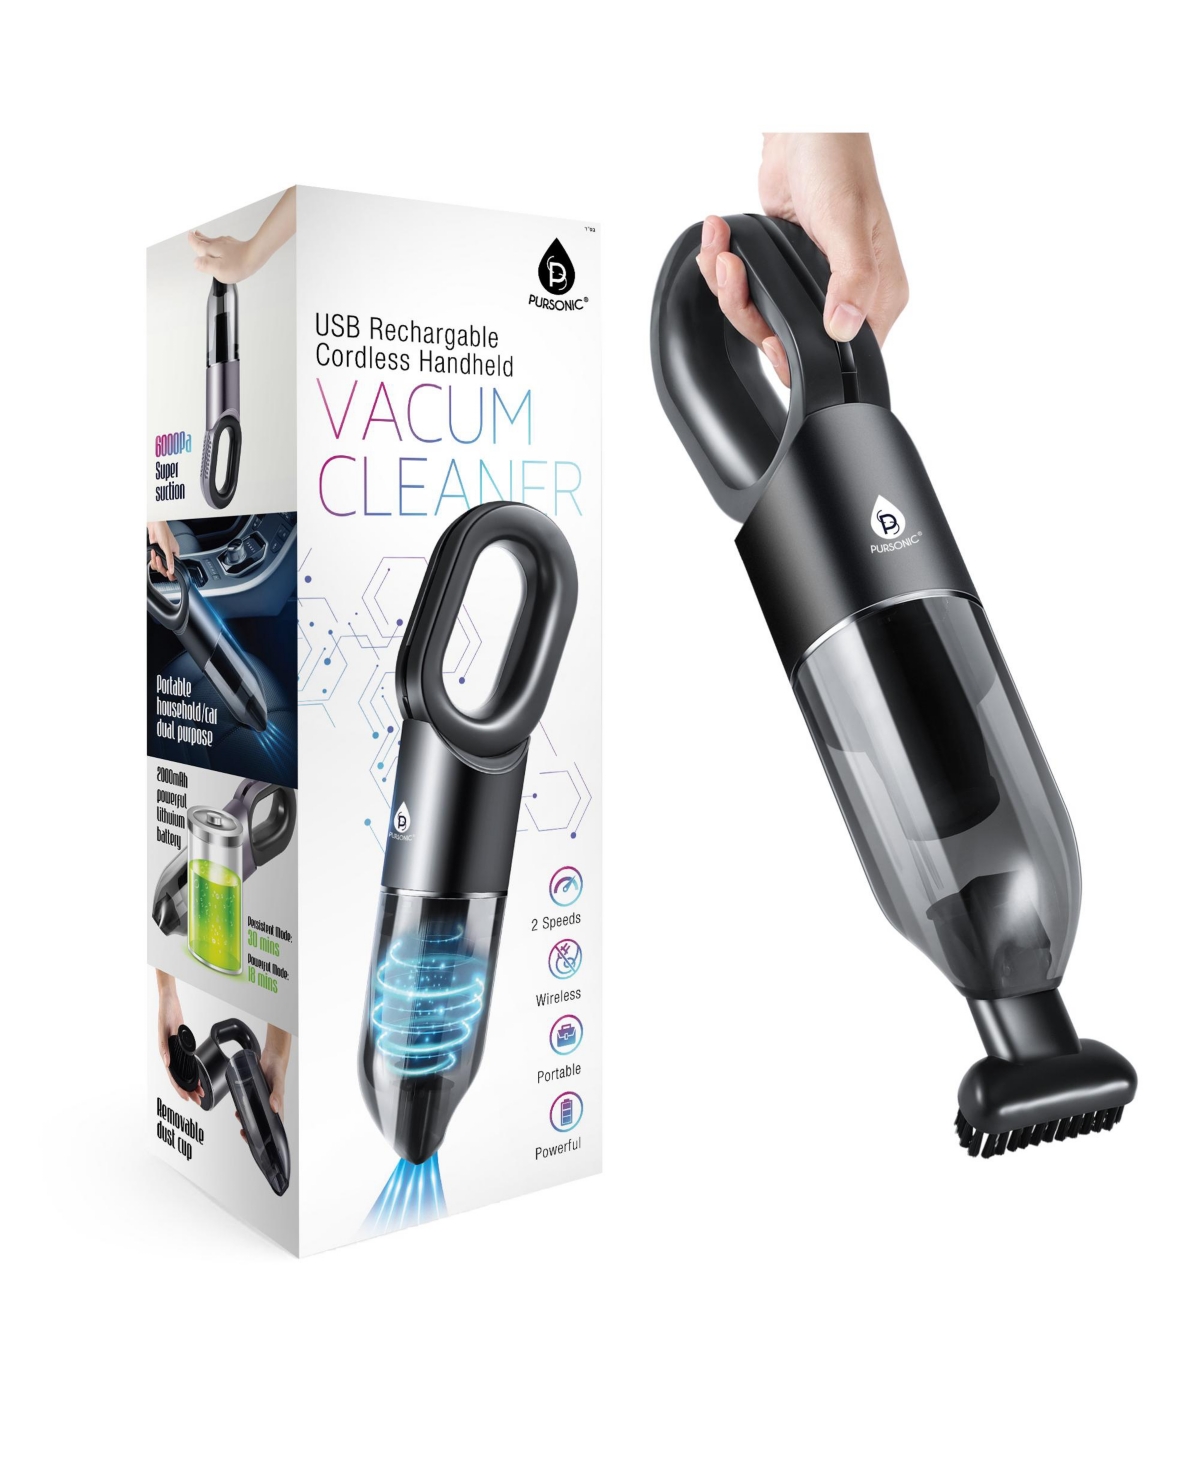 Usb Rechargeable Cordless Handheld Vacuum Cleaner - Black